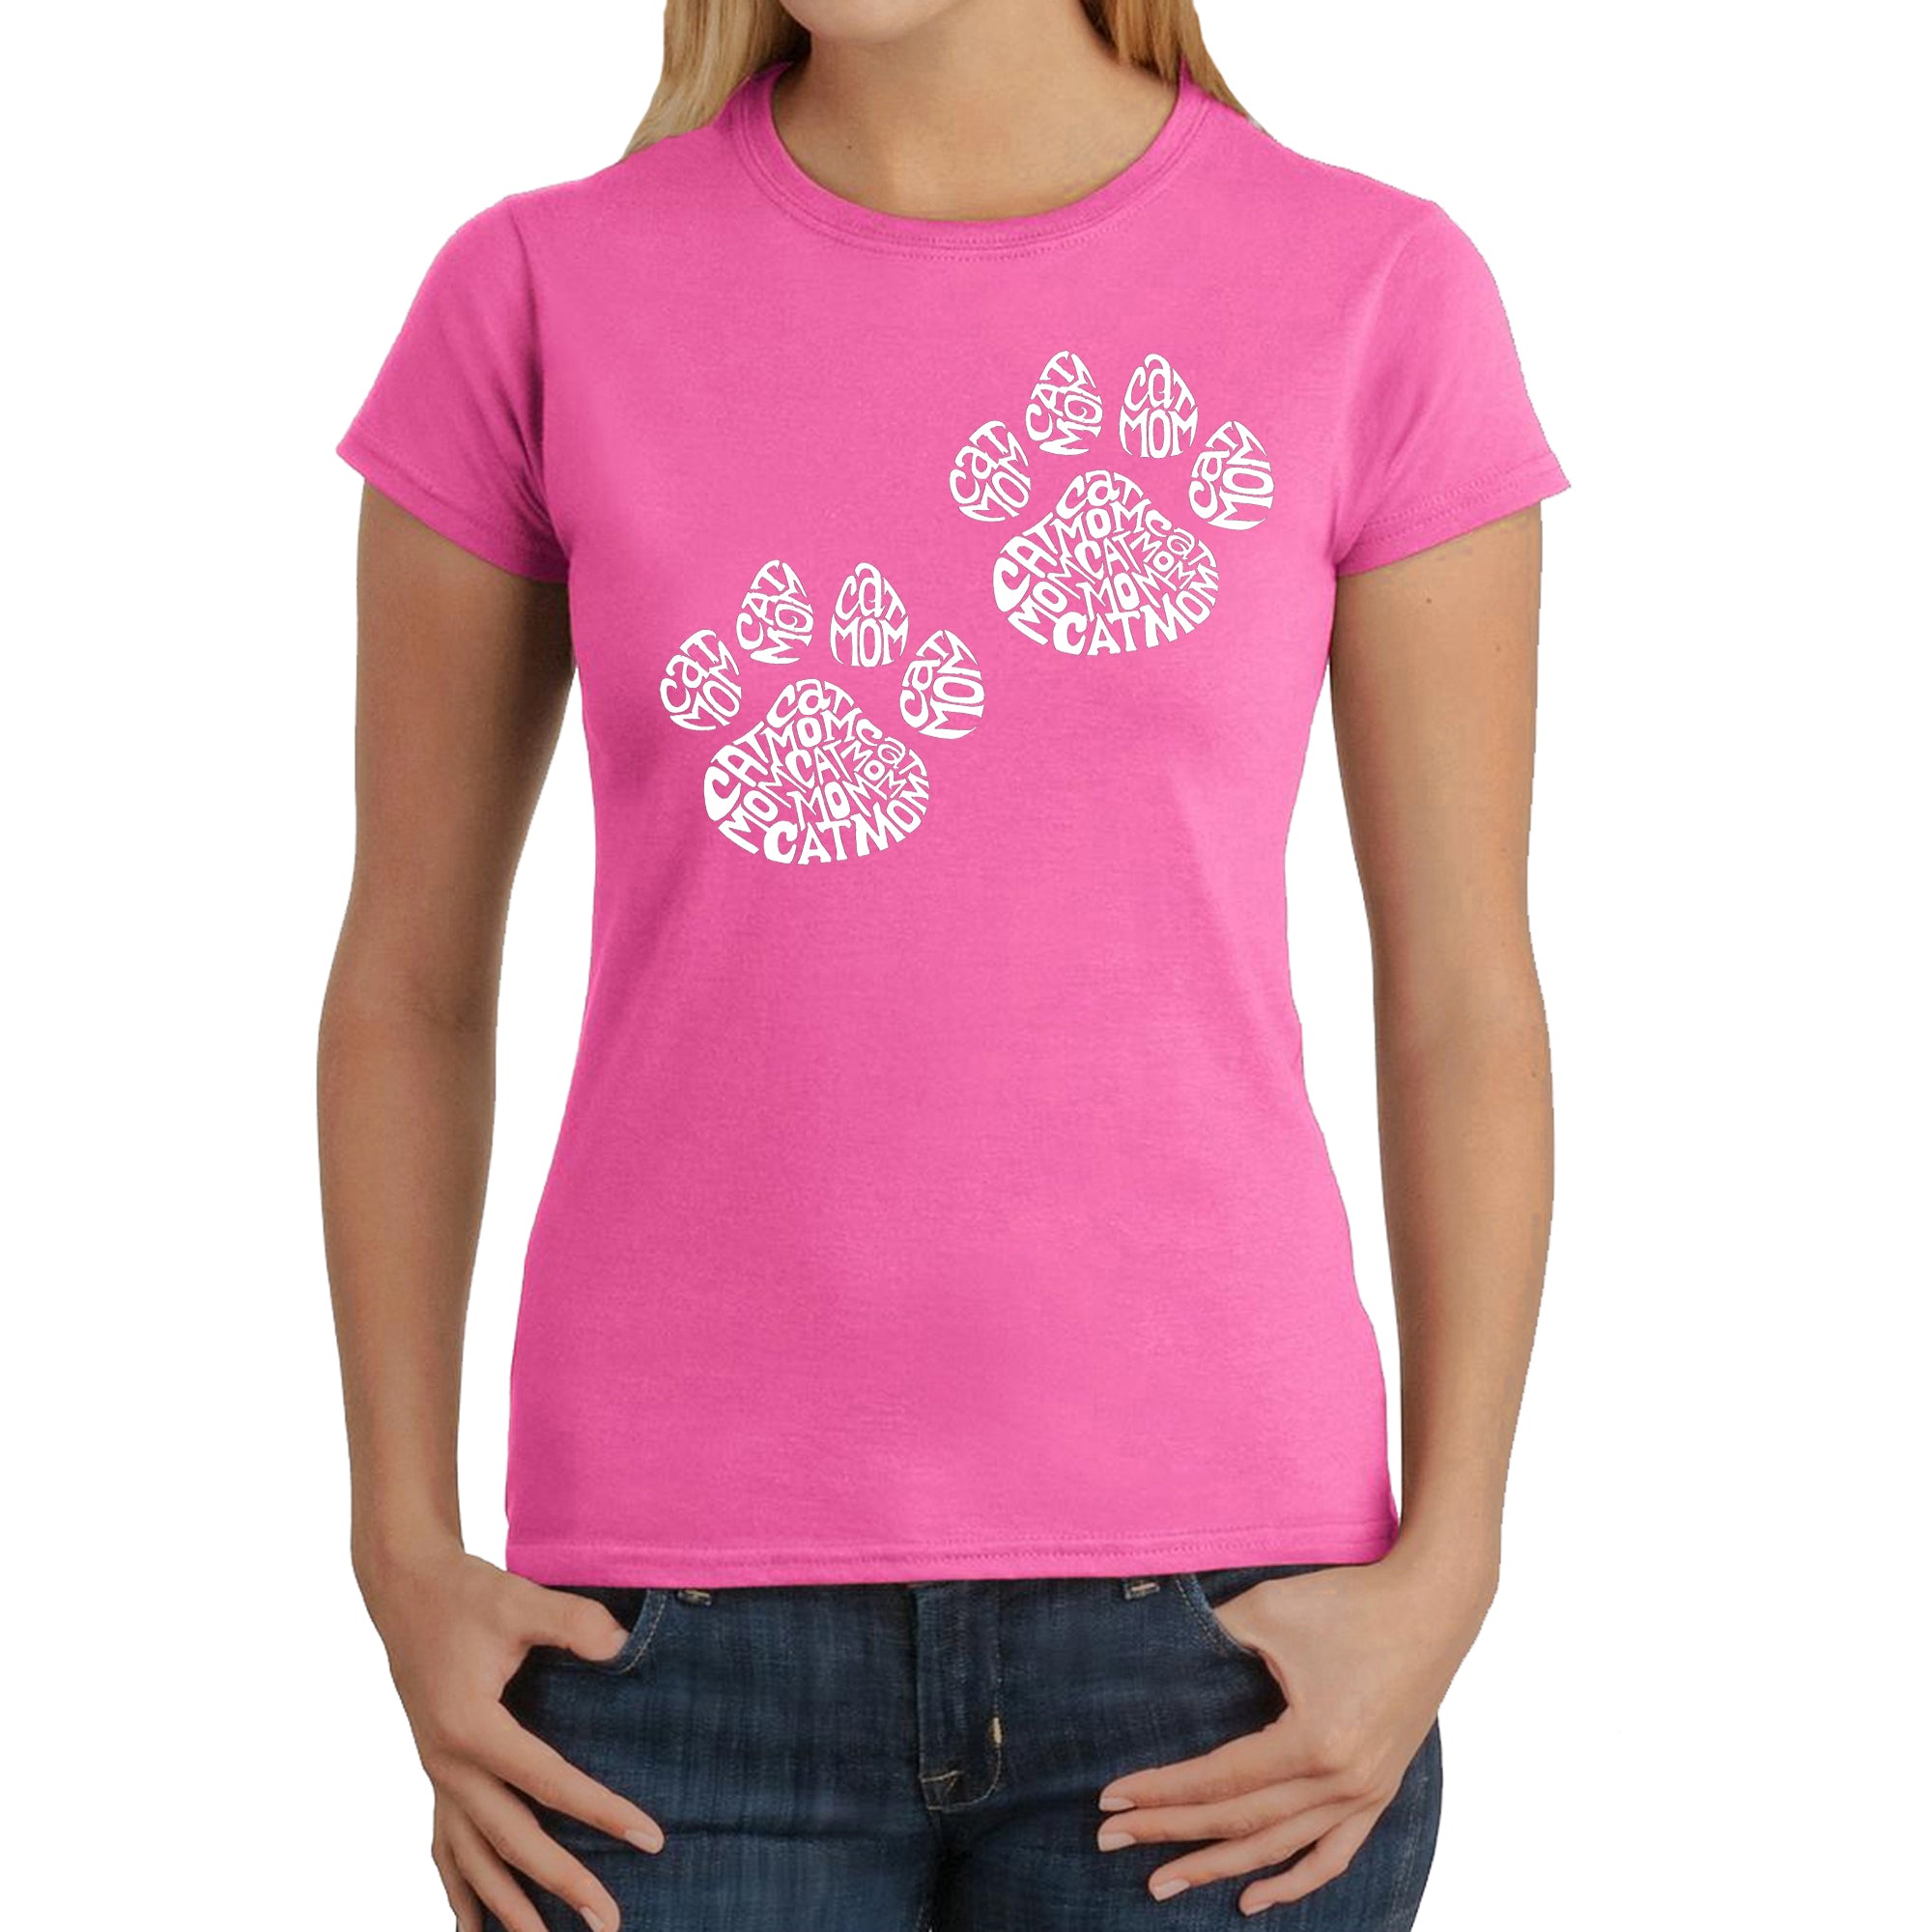 Cat Mom - Women's Word Art T-Shirt - Pink - Medium